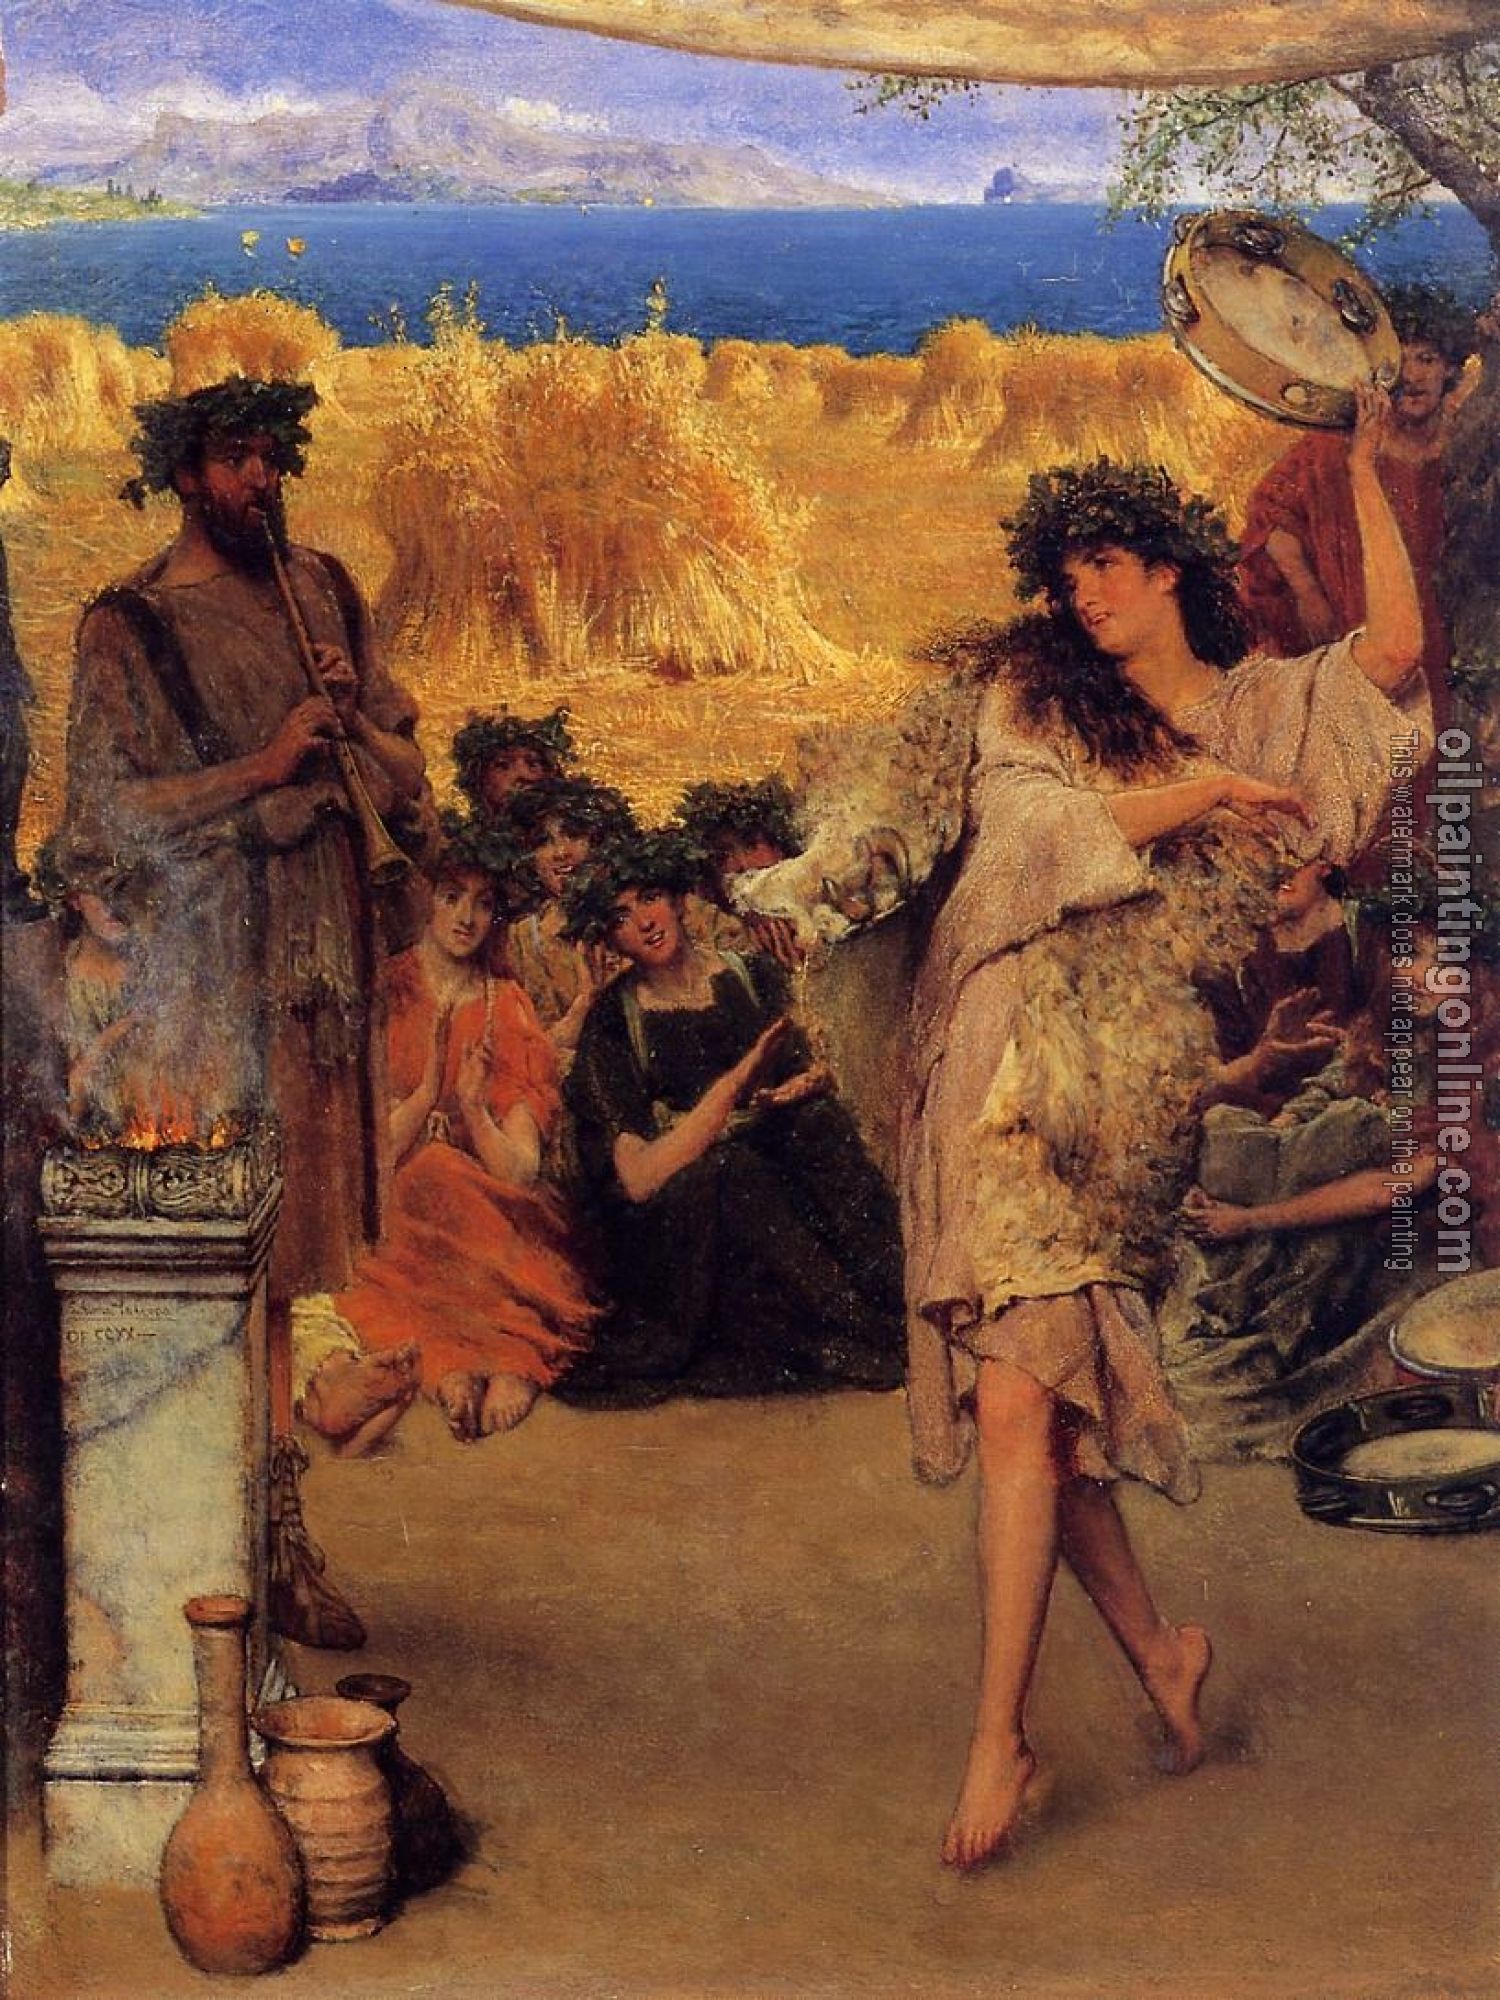 Alma-Tadema, Sir Lawrence - Harvest Festival